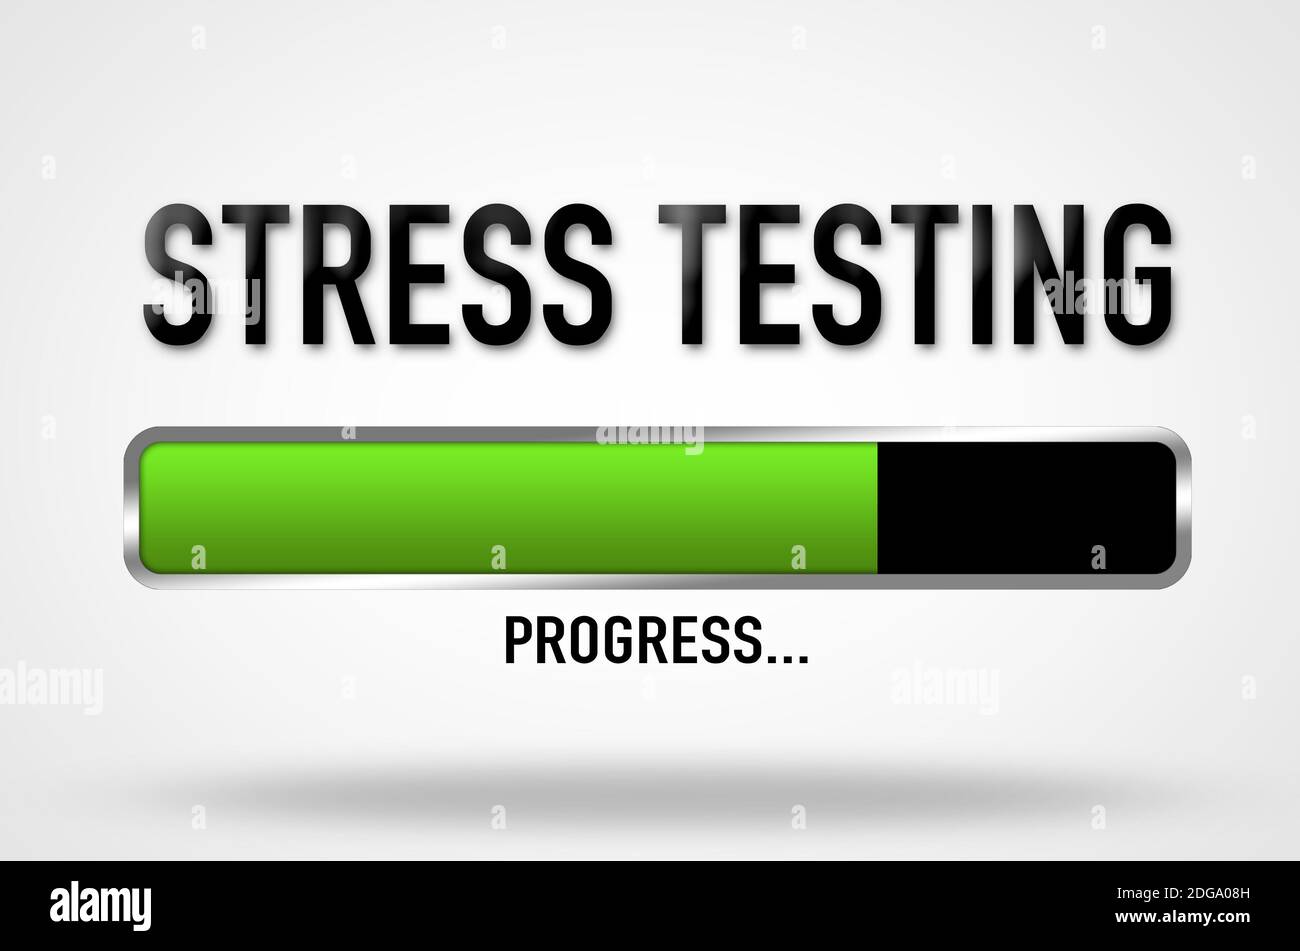 Stress testing - loading bar process Stock Photo